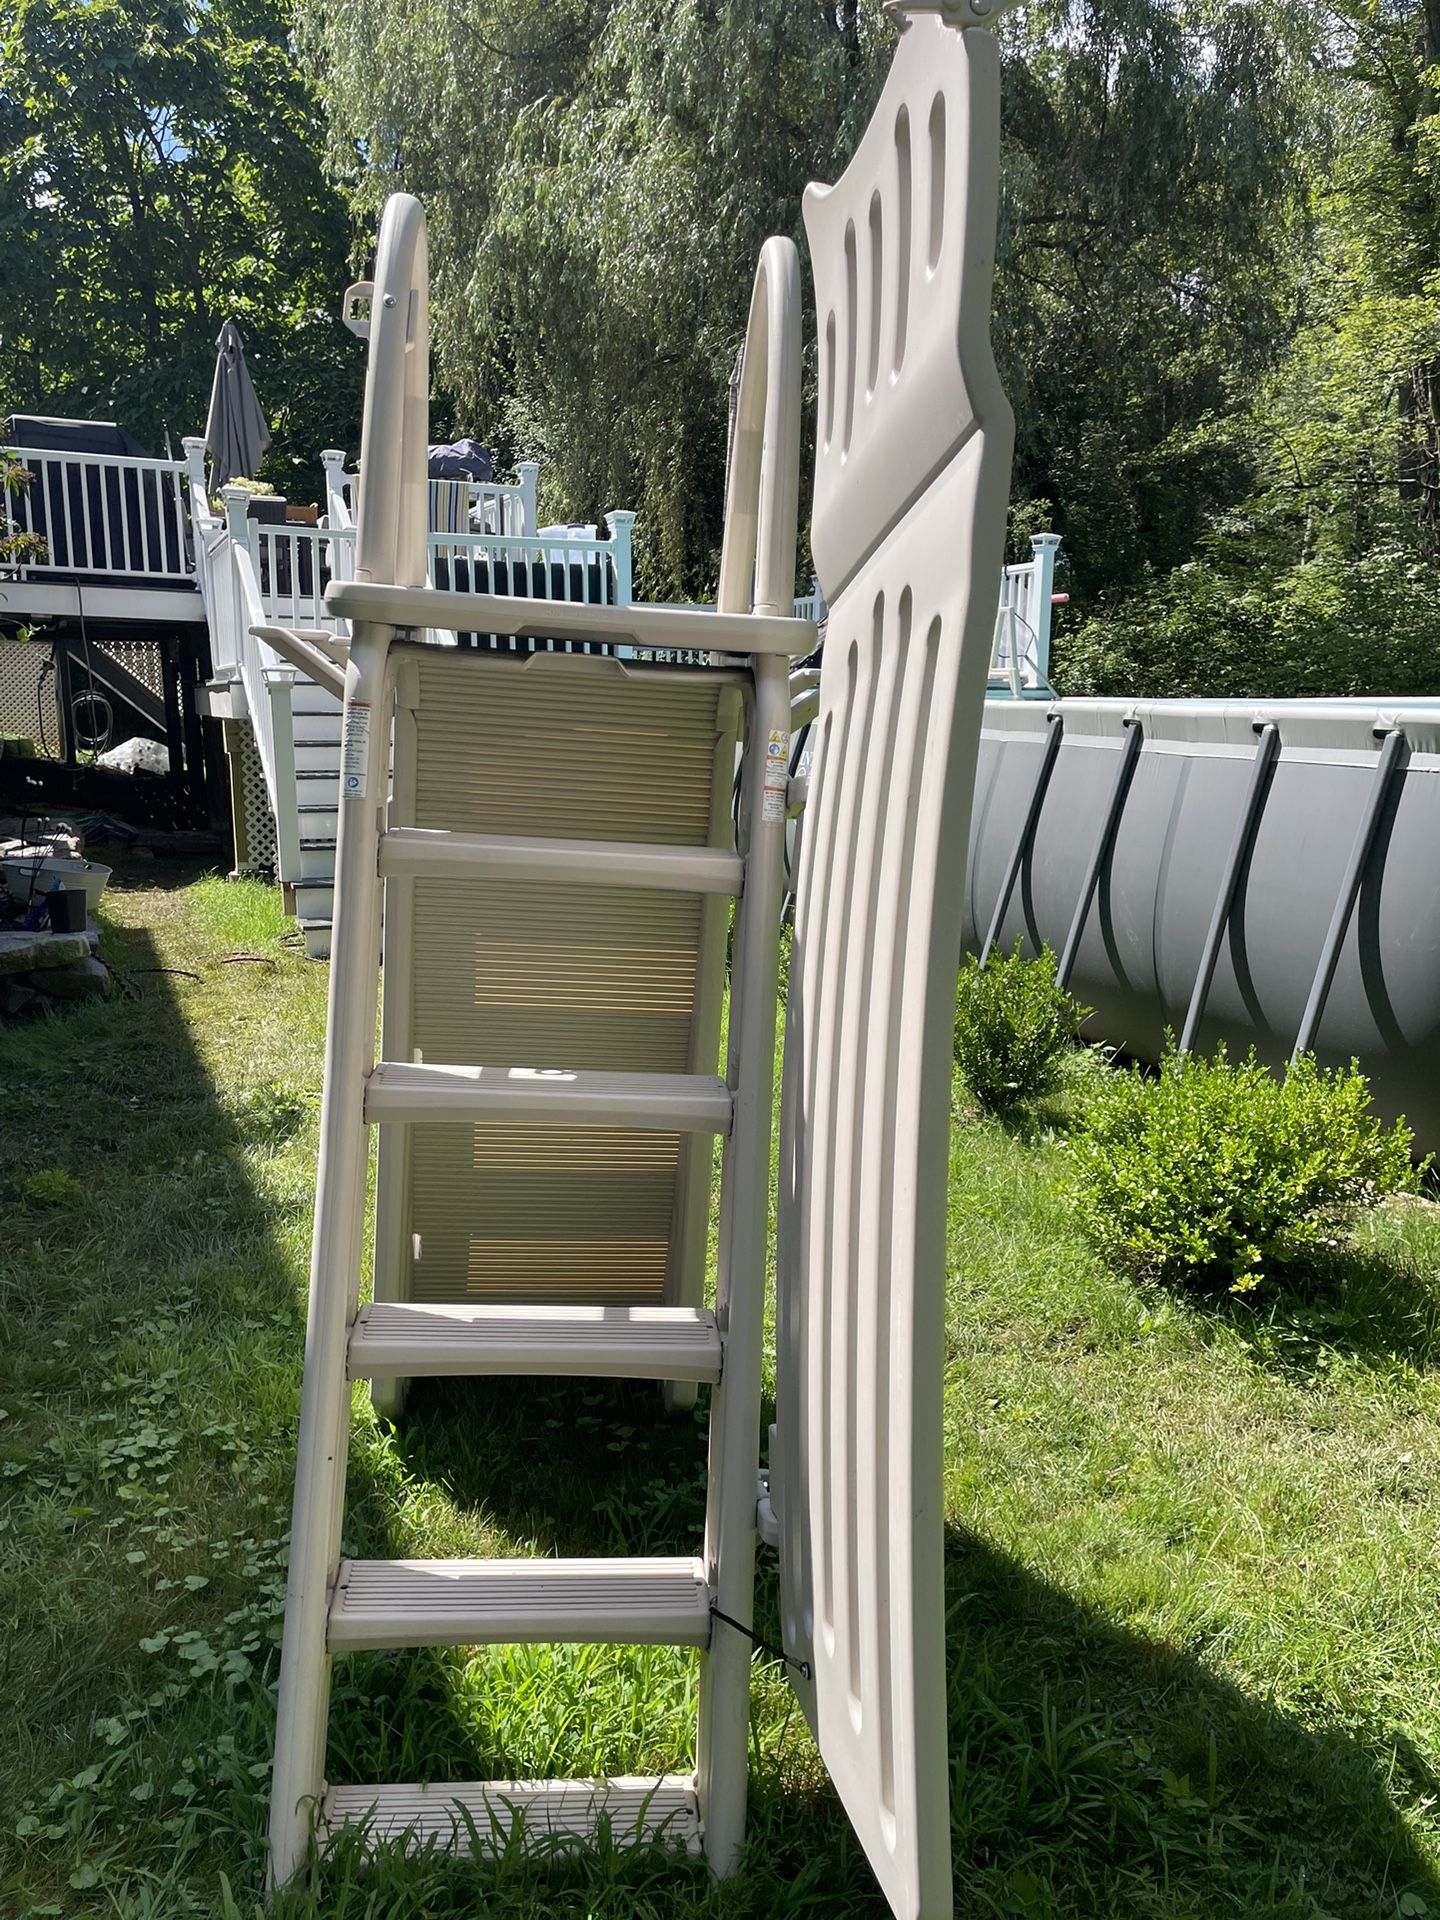 Confer Pool Ladder With Locking Gate